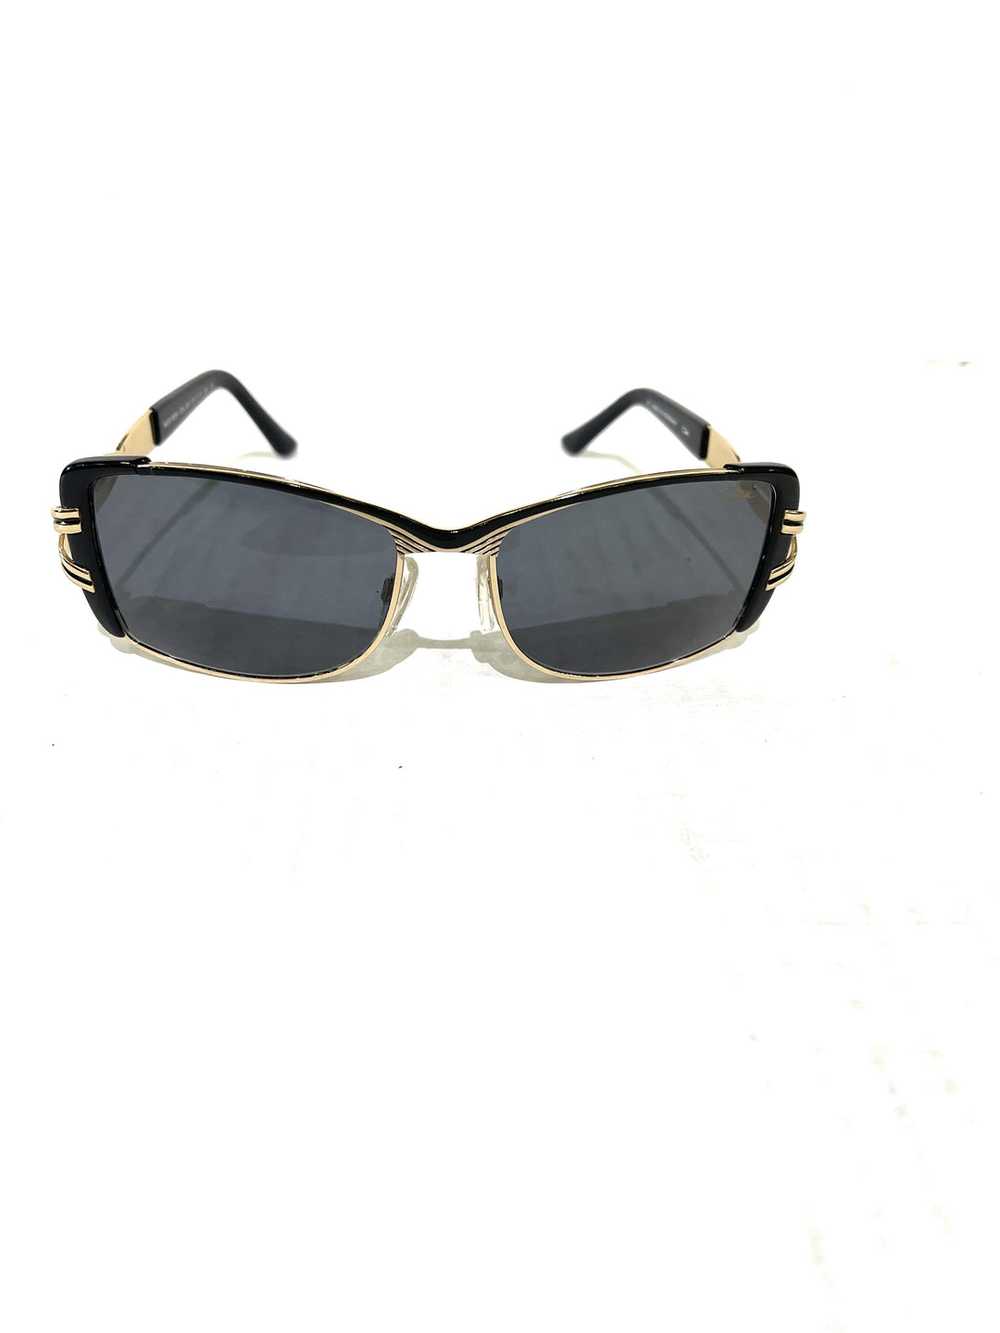 Cazal Black and Gold Sunglasses - image 1